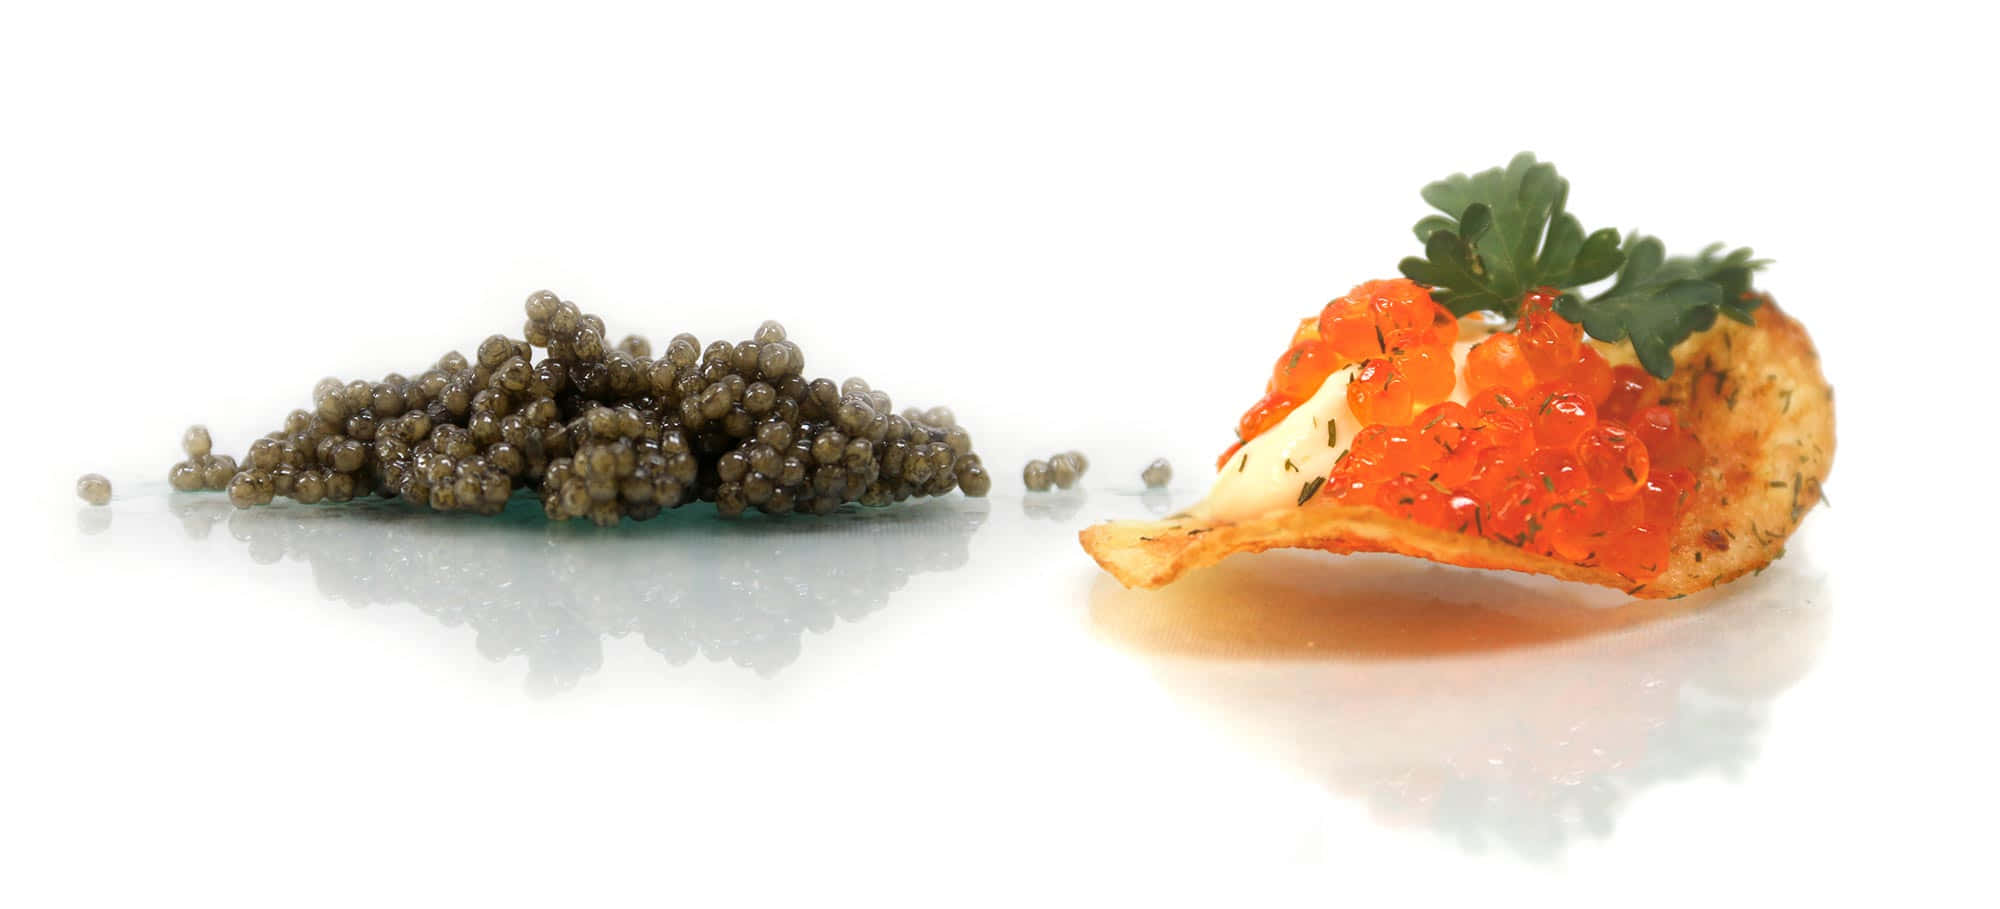 The Playful Black Caviar Wallpaper